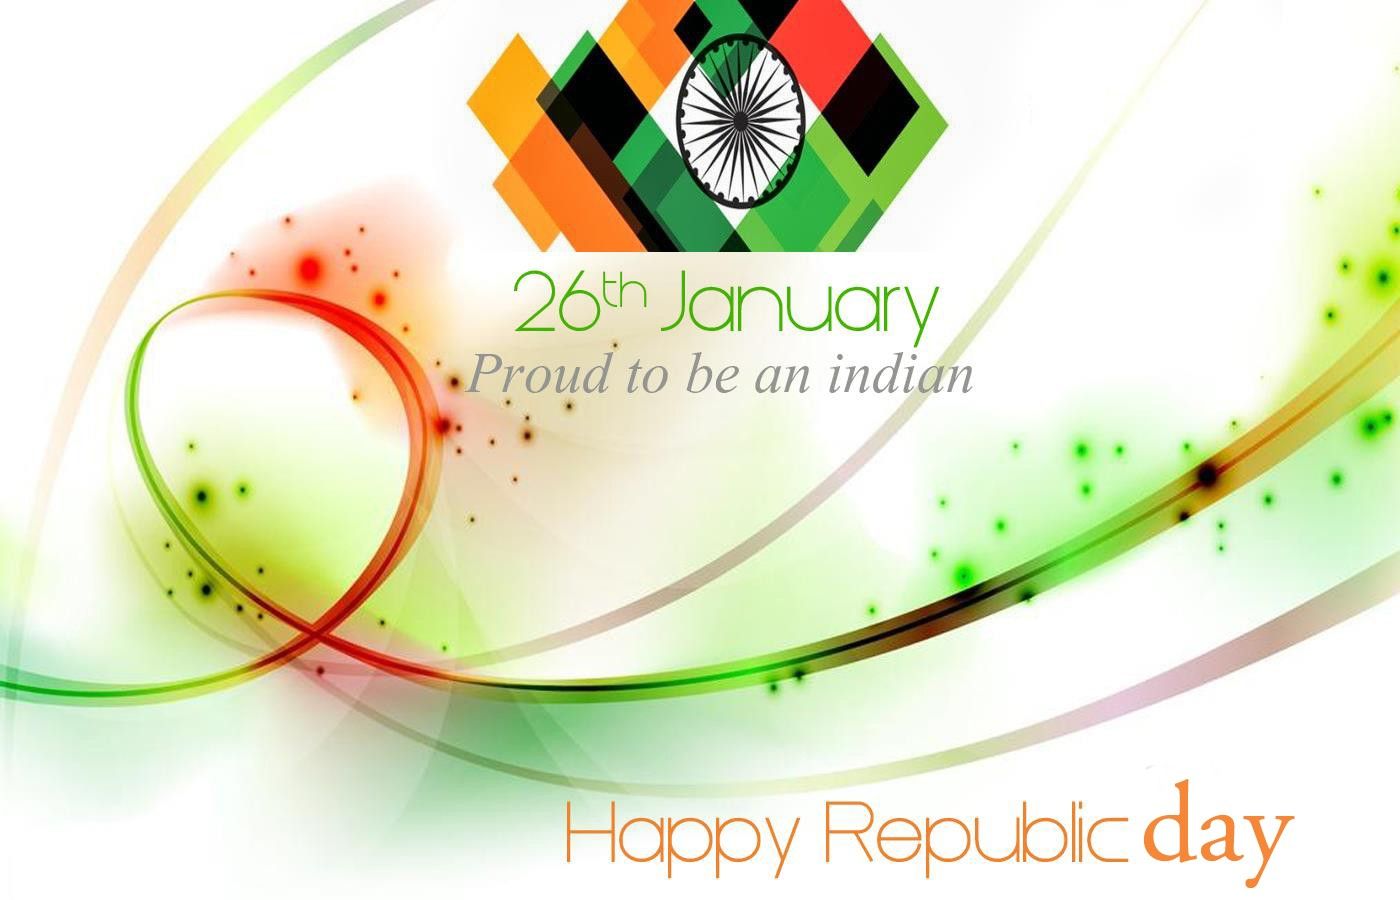 Republic Day Image 2021 Free Download Republic Day HD Wallpaper, Pics Eid Mubarak Image 2020